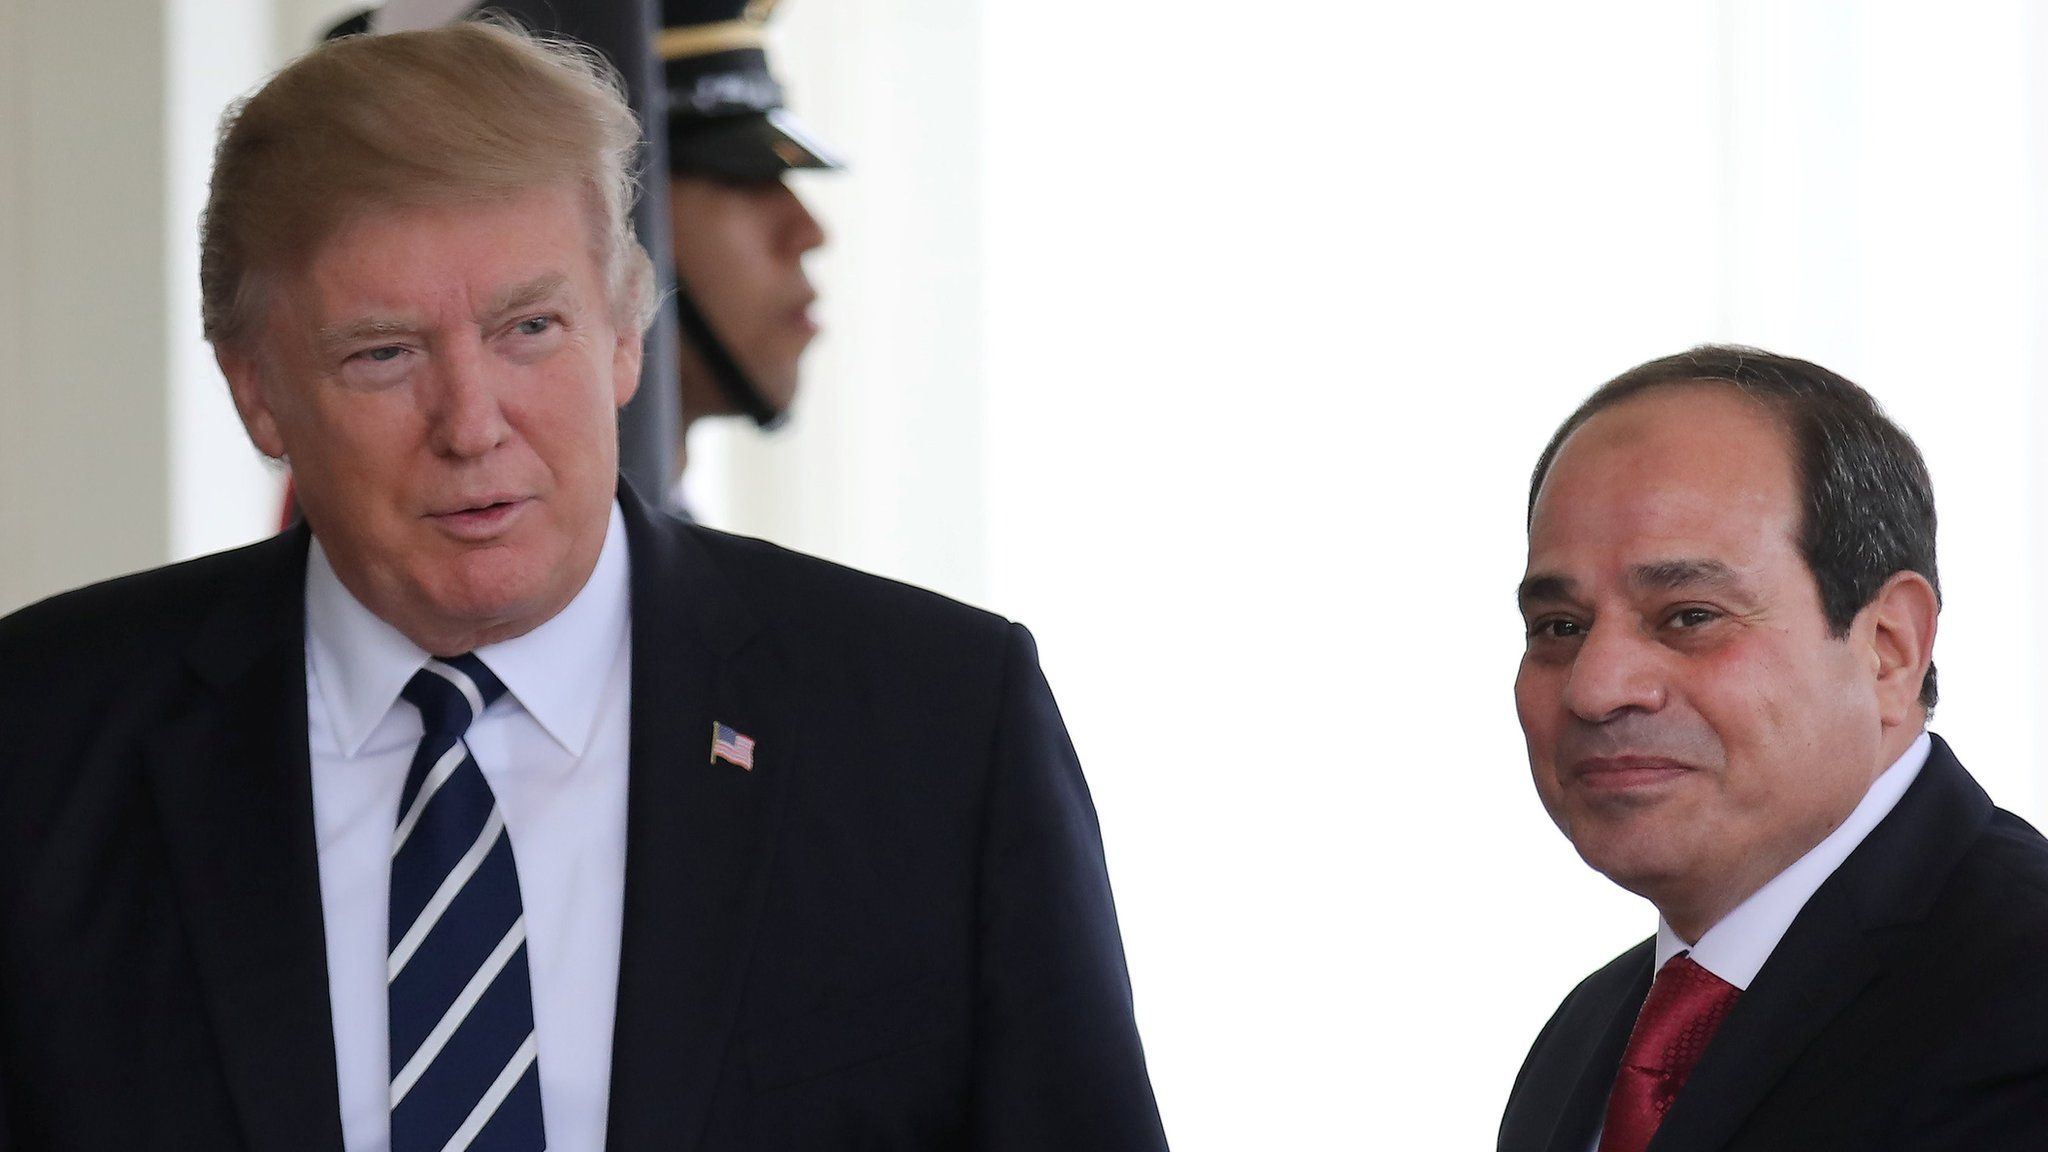 US President Donald Trump welcomes Egypt's President Abdul Fattah al-Sisi at the White House (3 April 2017)